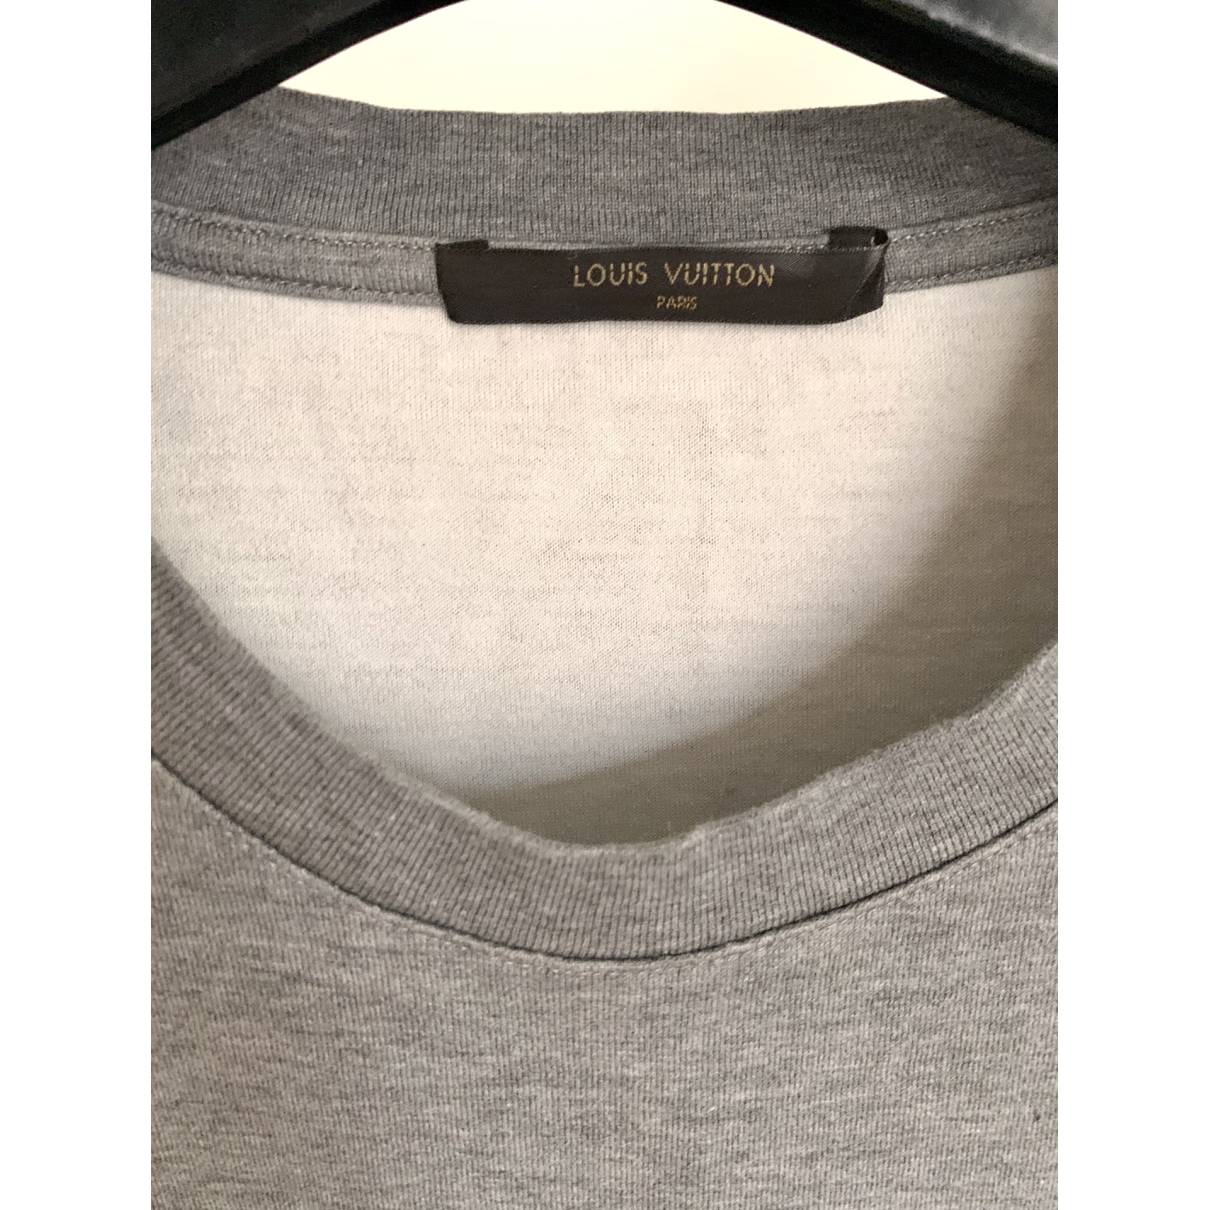 T-shirt Louis Vuitton Grey size XL International in Cotton - 30448300